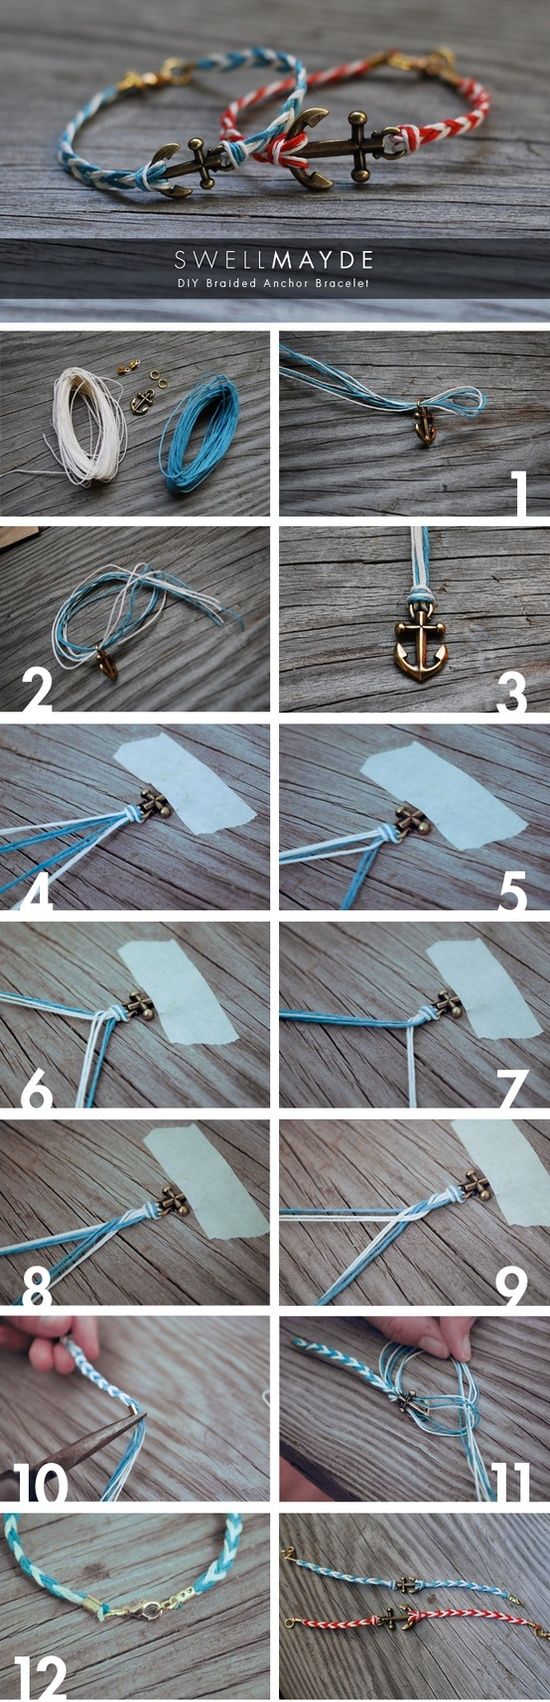 DIY+Braided+Anchor+Bracelet